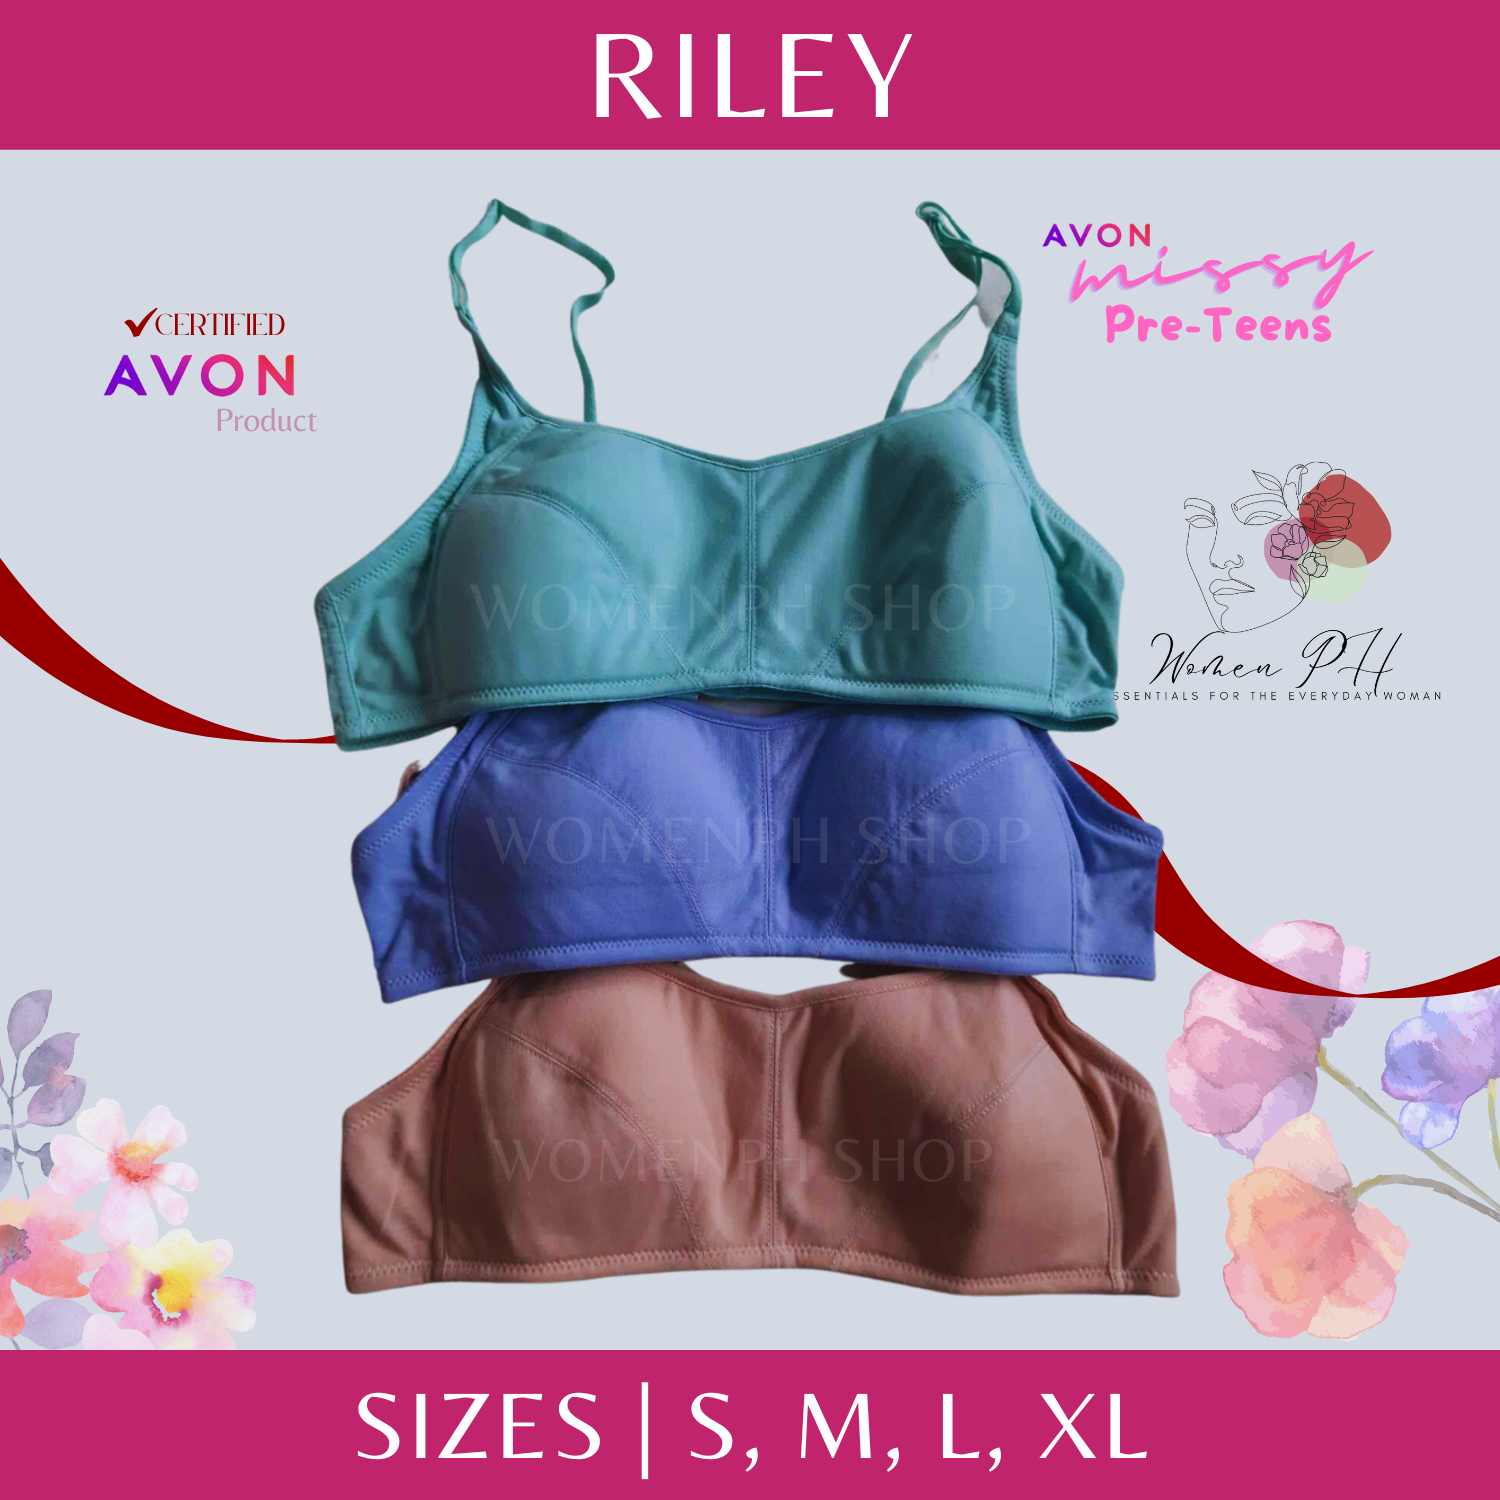 Avon - Product Detail : Riley 3pc Beginners Bra Set